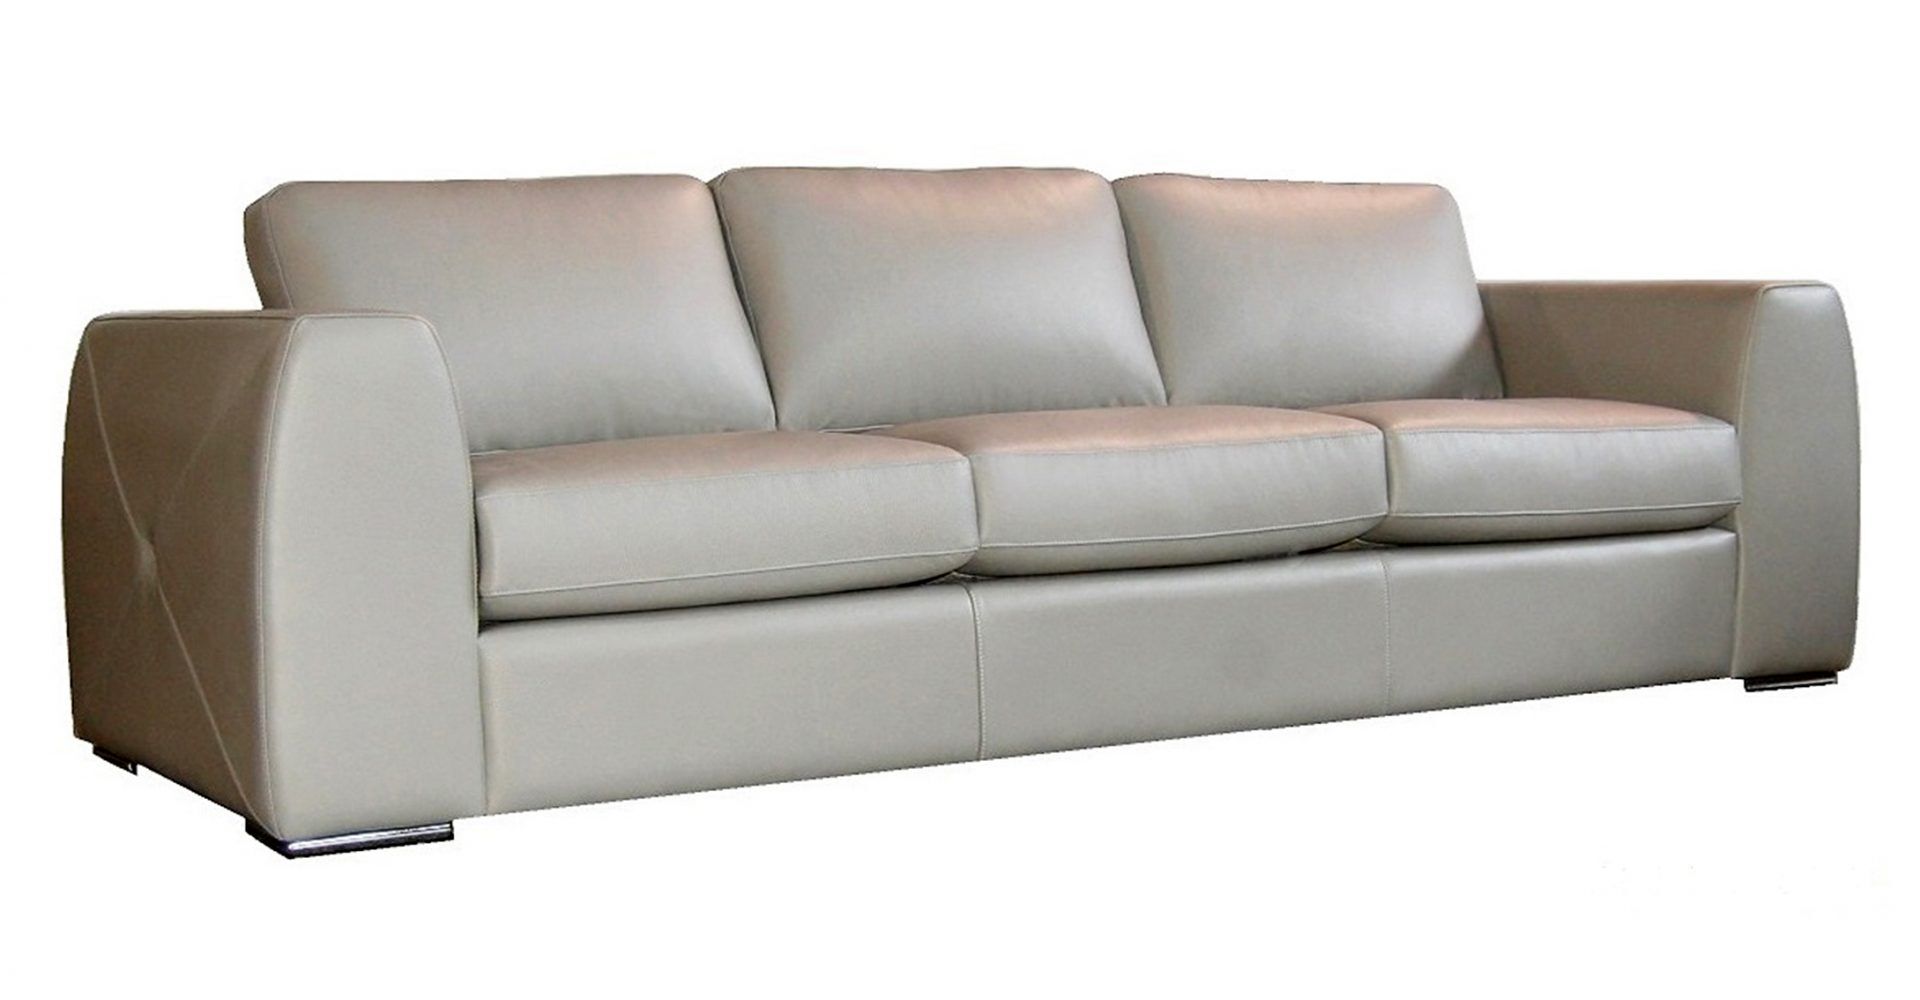 aston leather sofa review